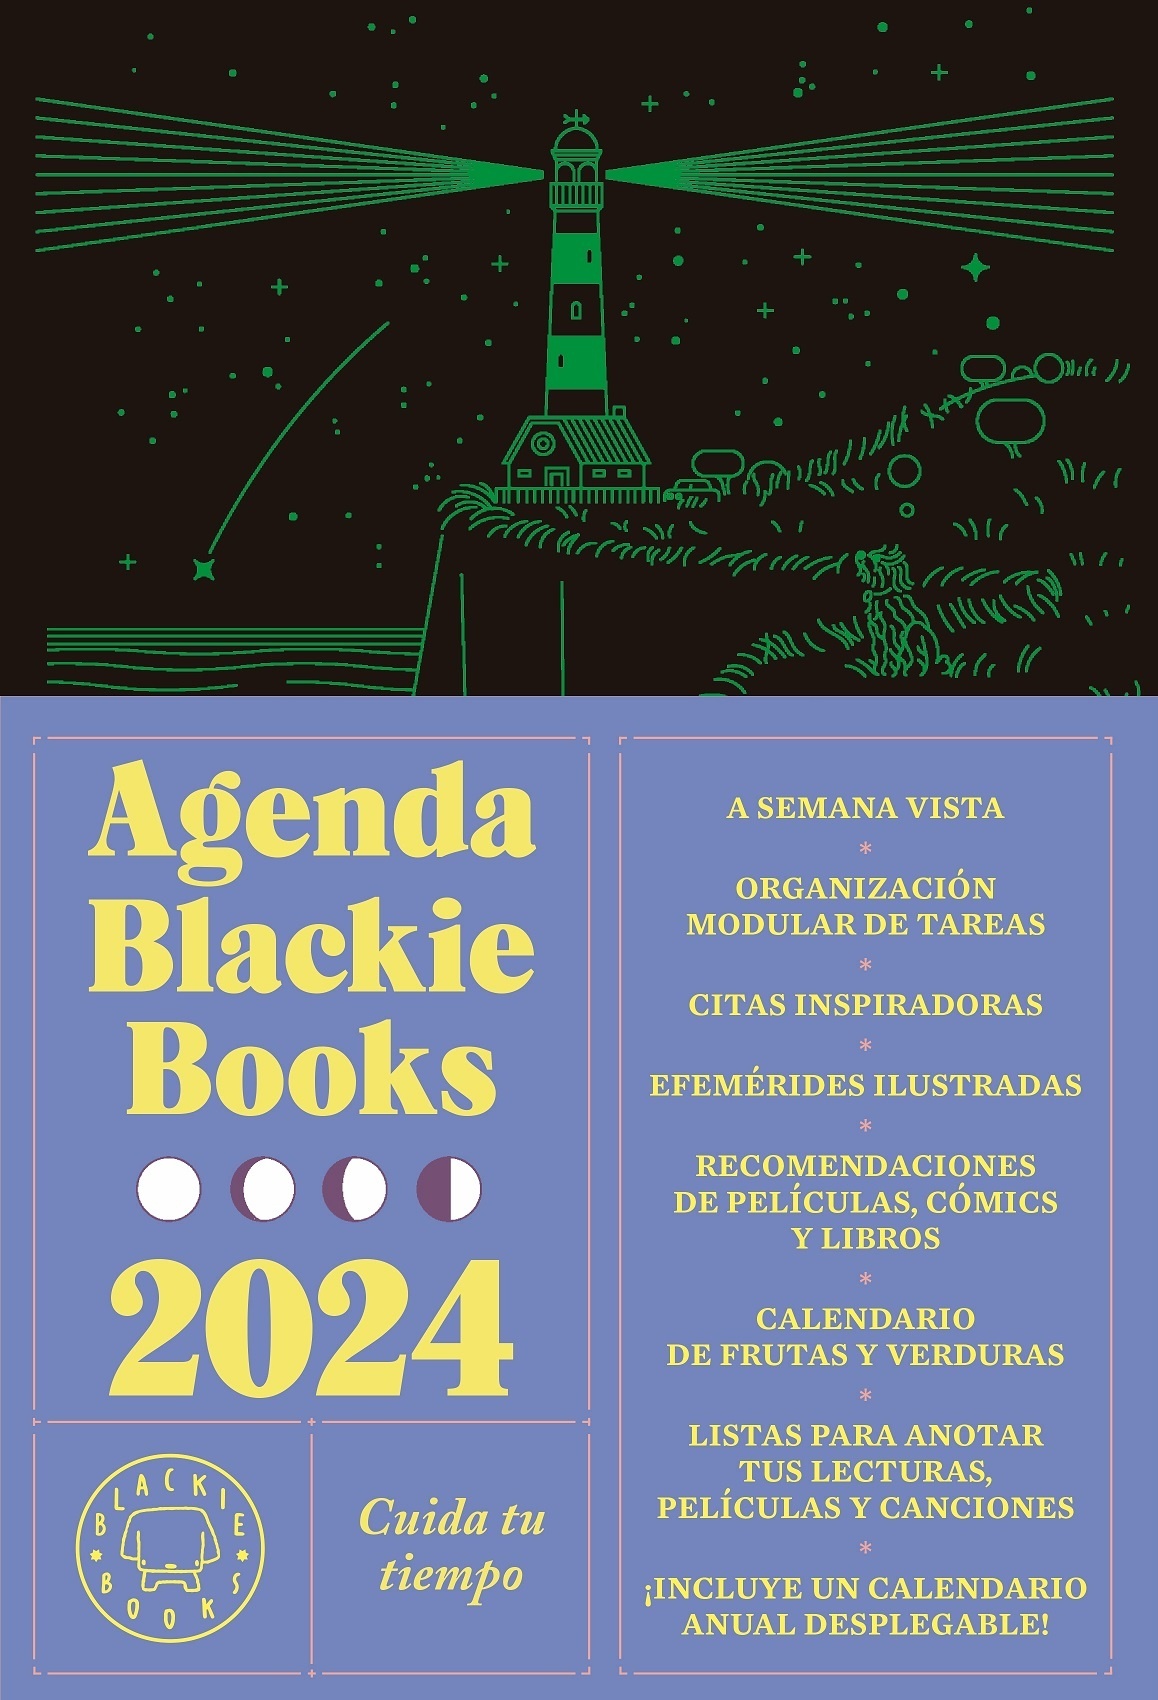 Agenda Blackie Books 2024 "Cuida tu tiempo"